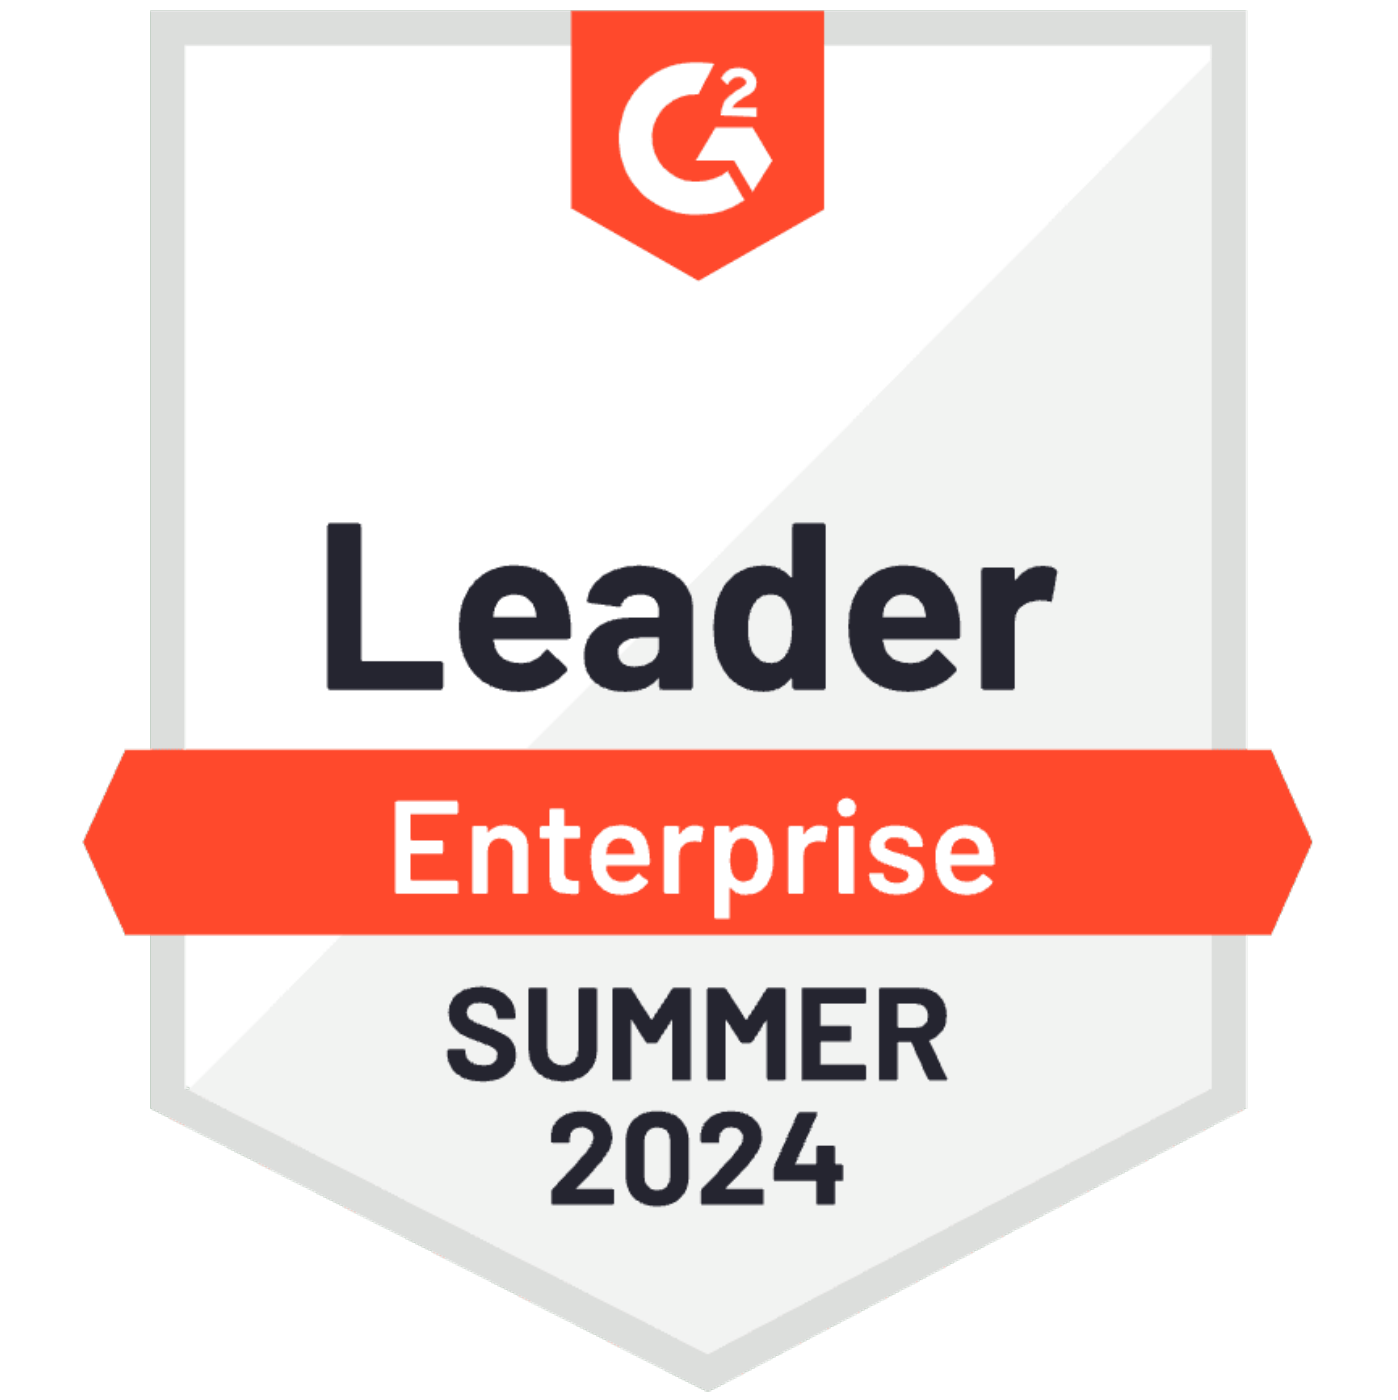 G2 Leader Enterprise Summer 2024